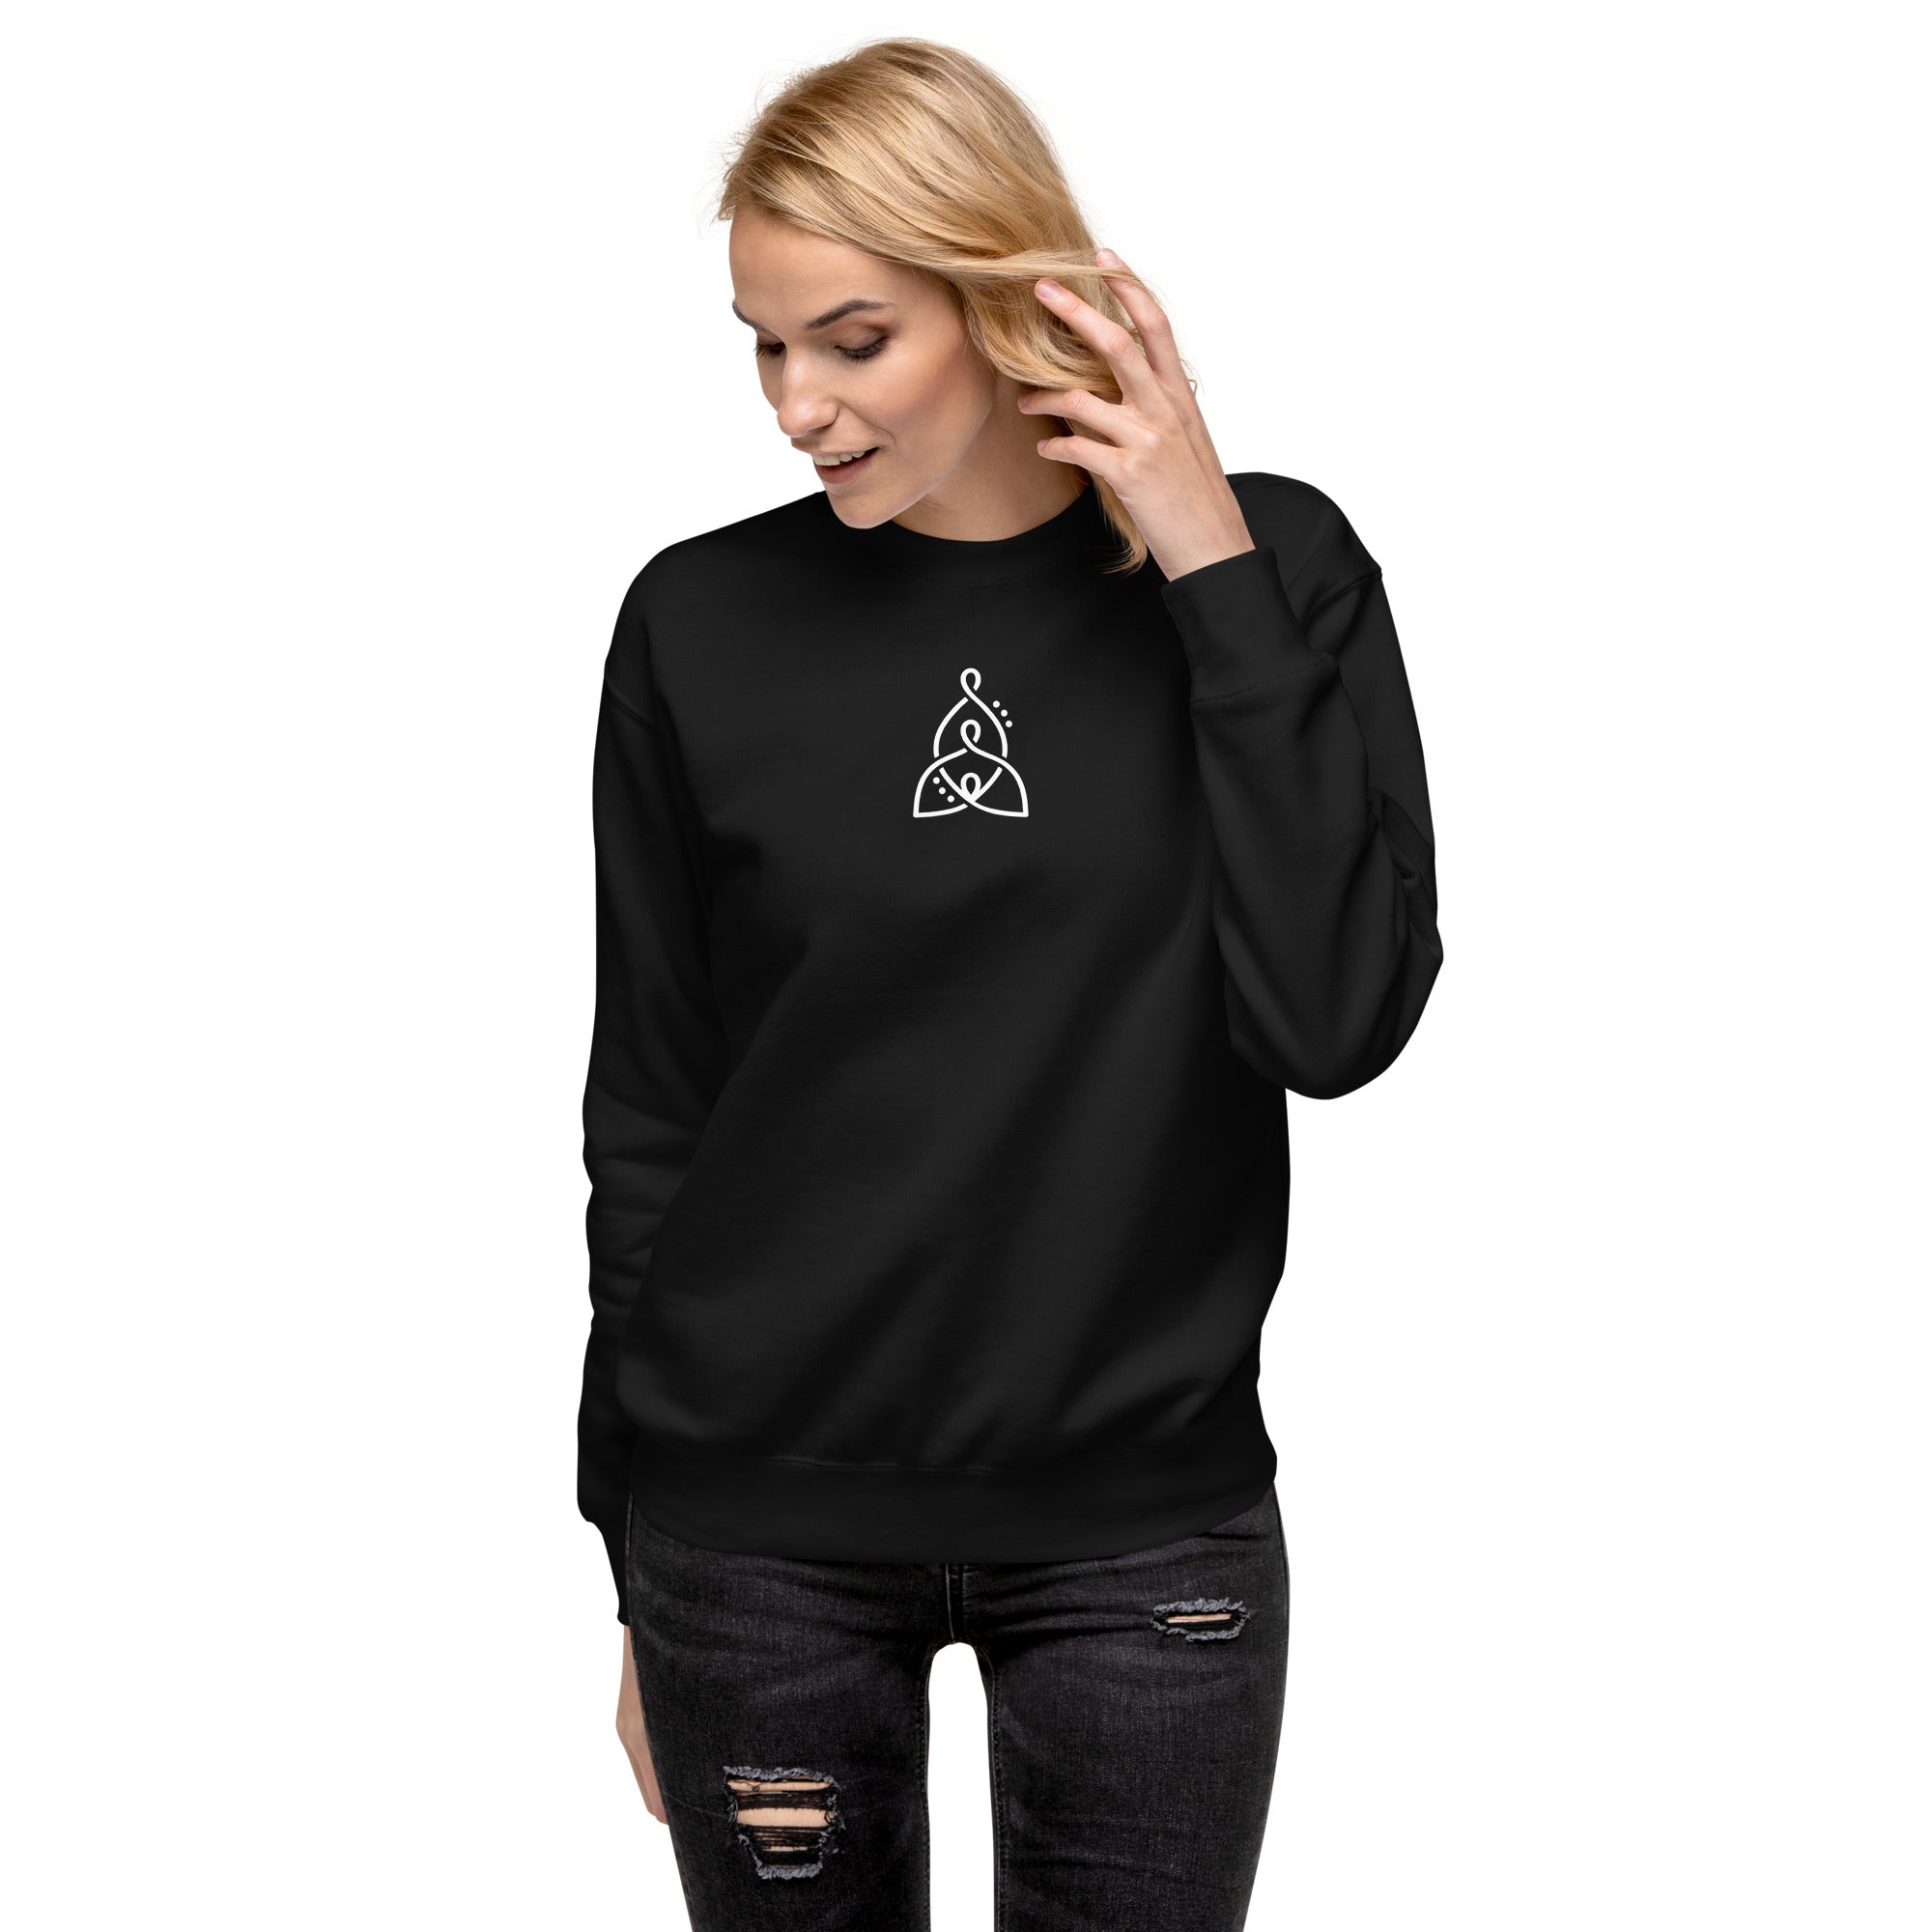 unisex-premium-sweatshirt-black-front-663d0a3839592.jpg